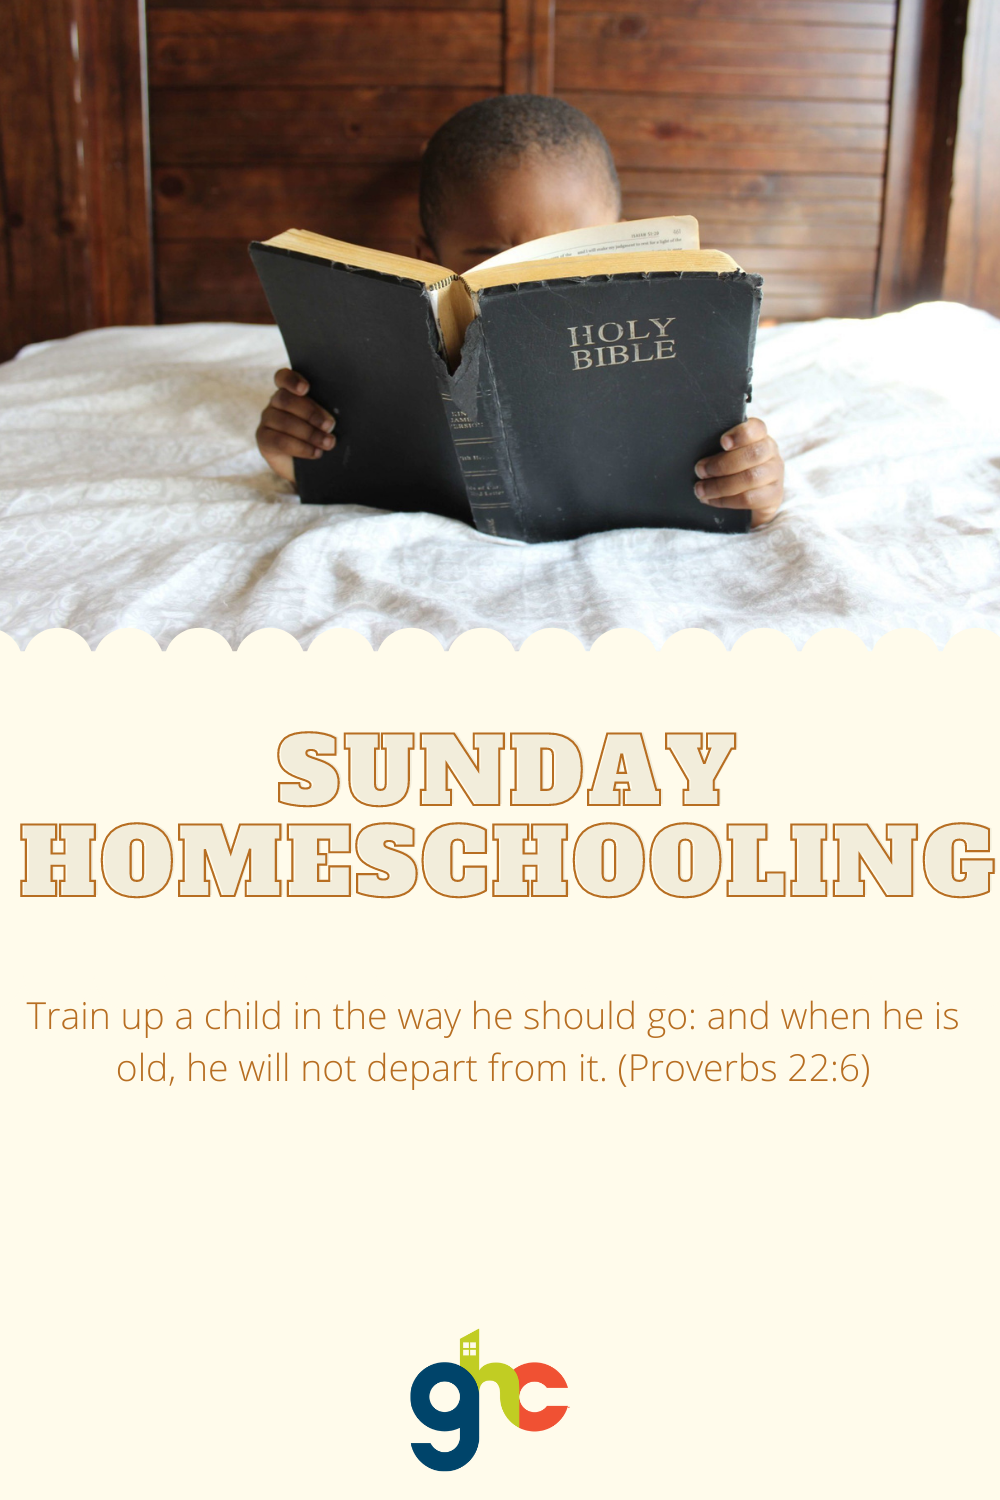 homeschooling on a Sunday